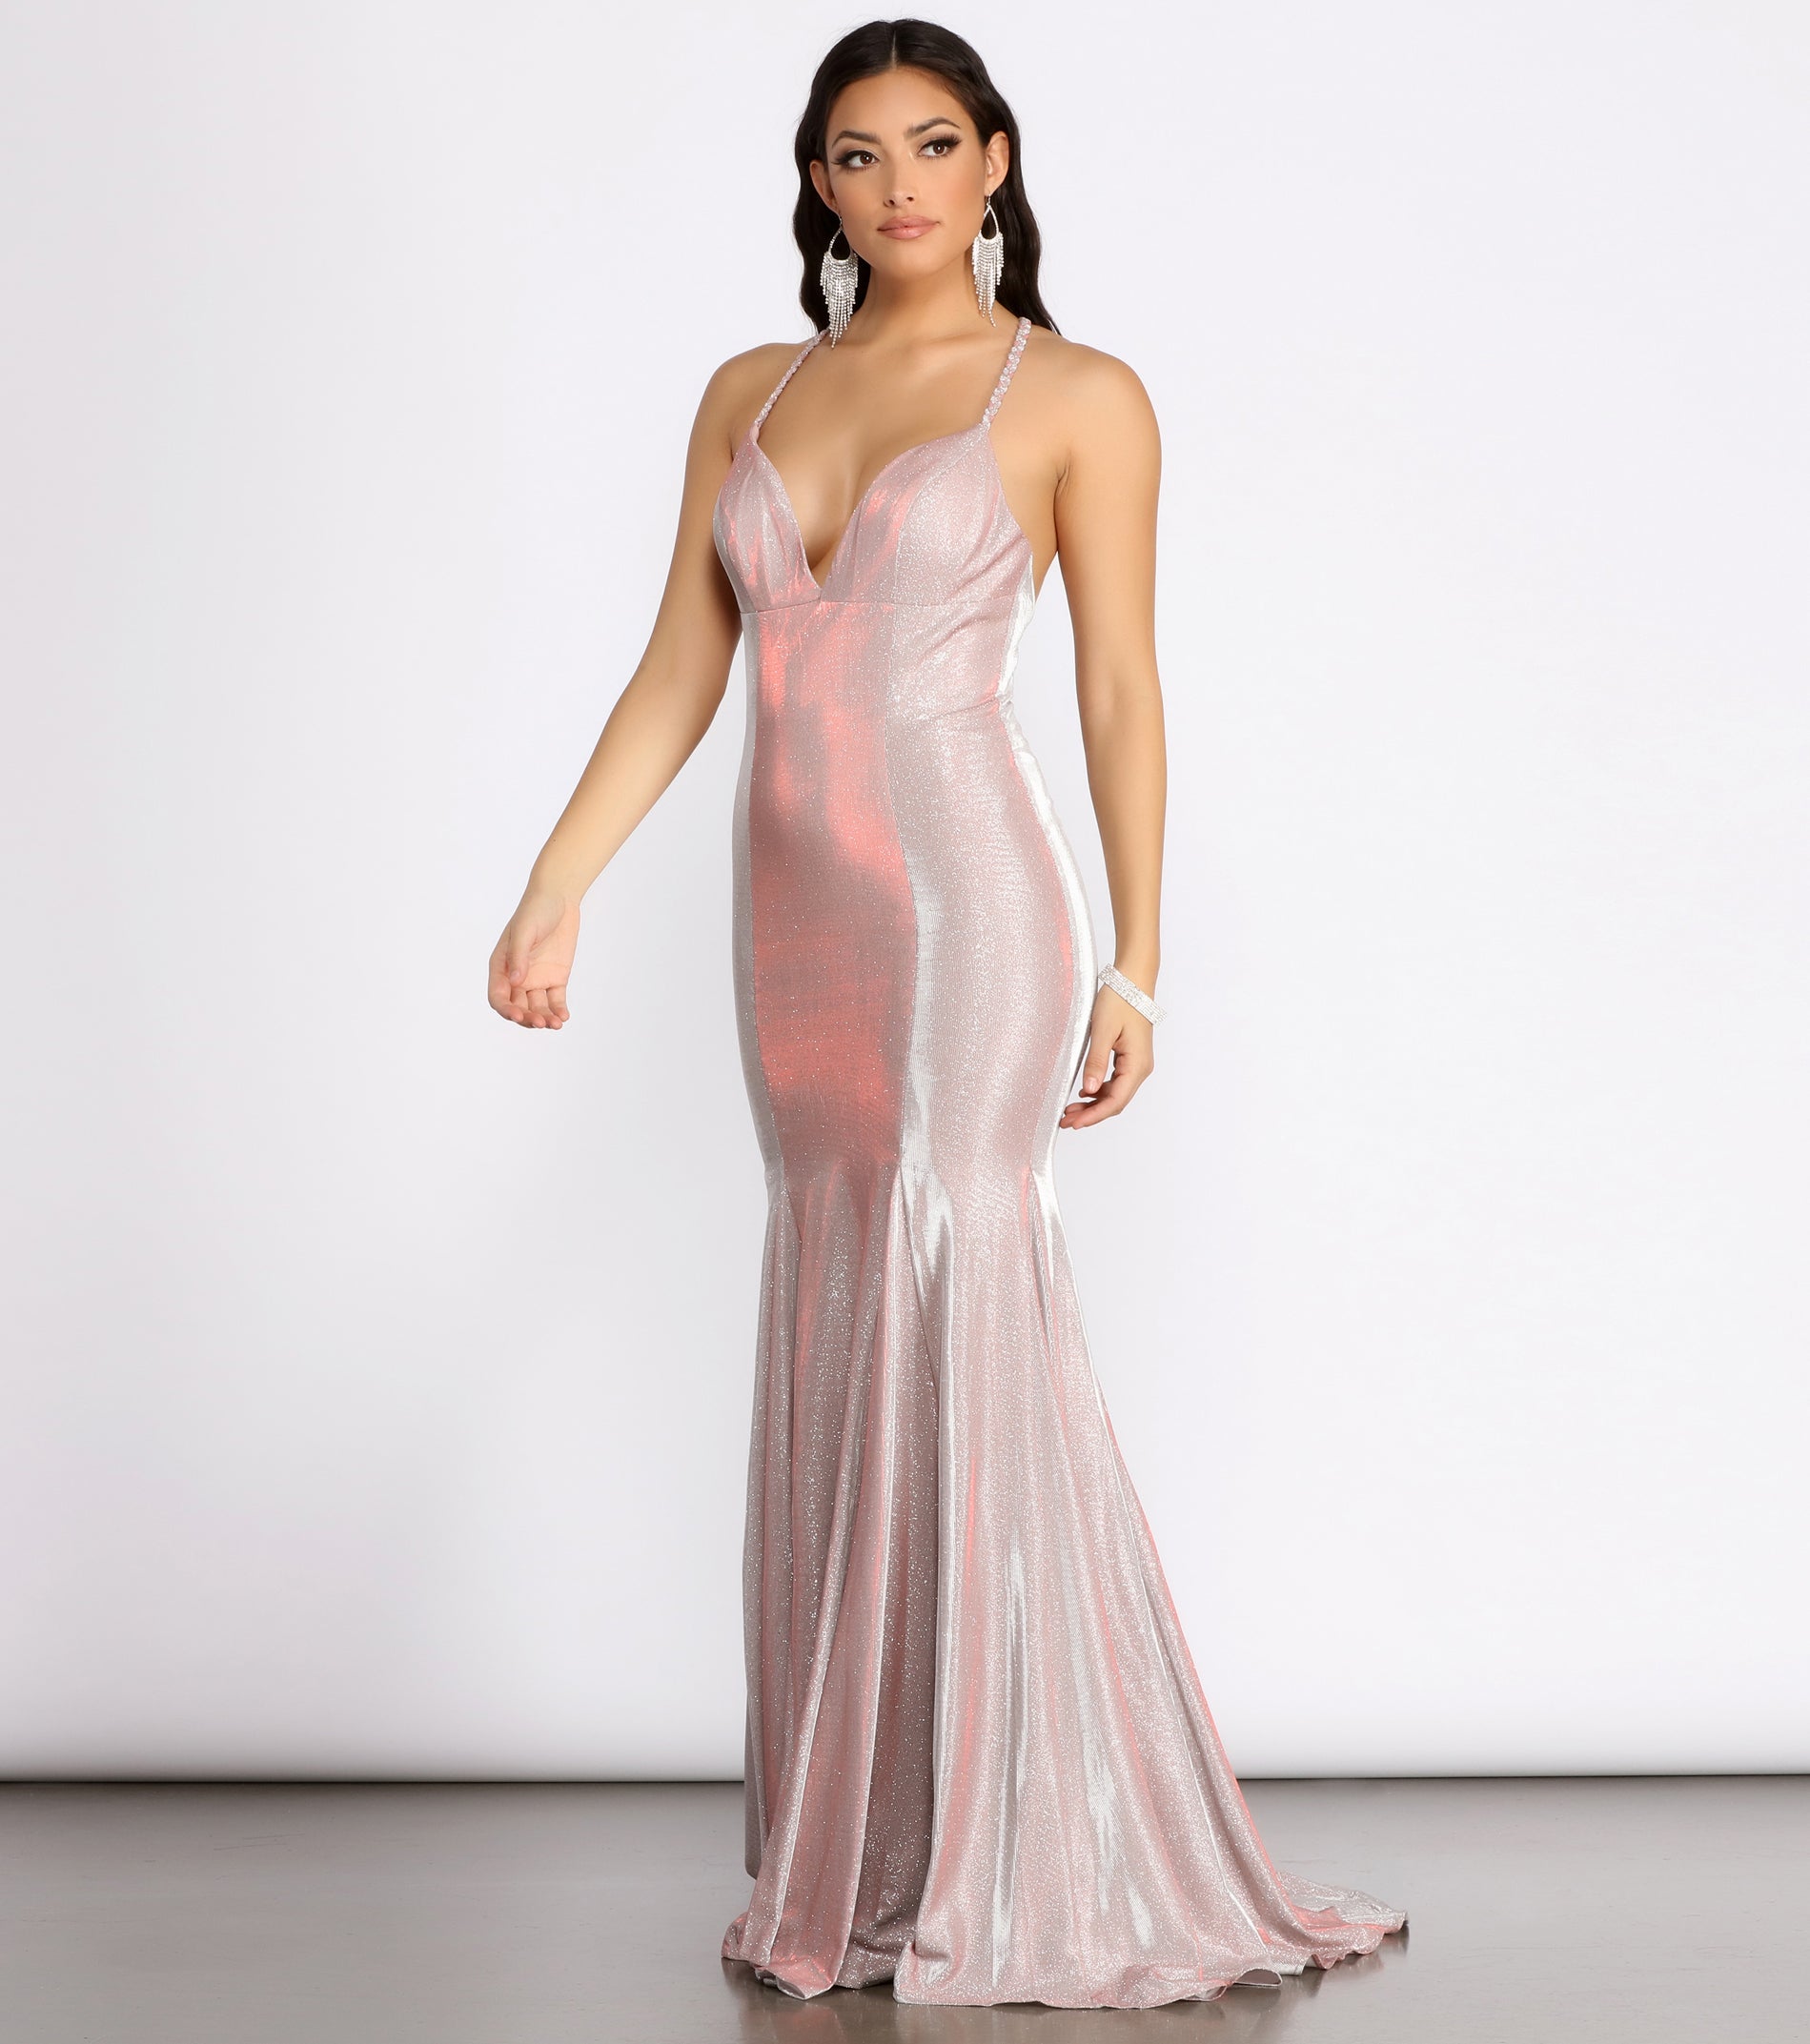 Evita Formal Glitter Mermaid Dress & Windsor